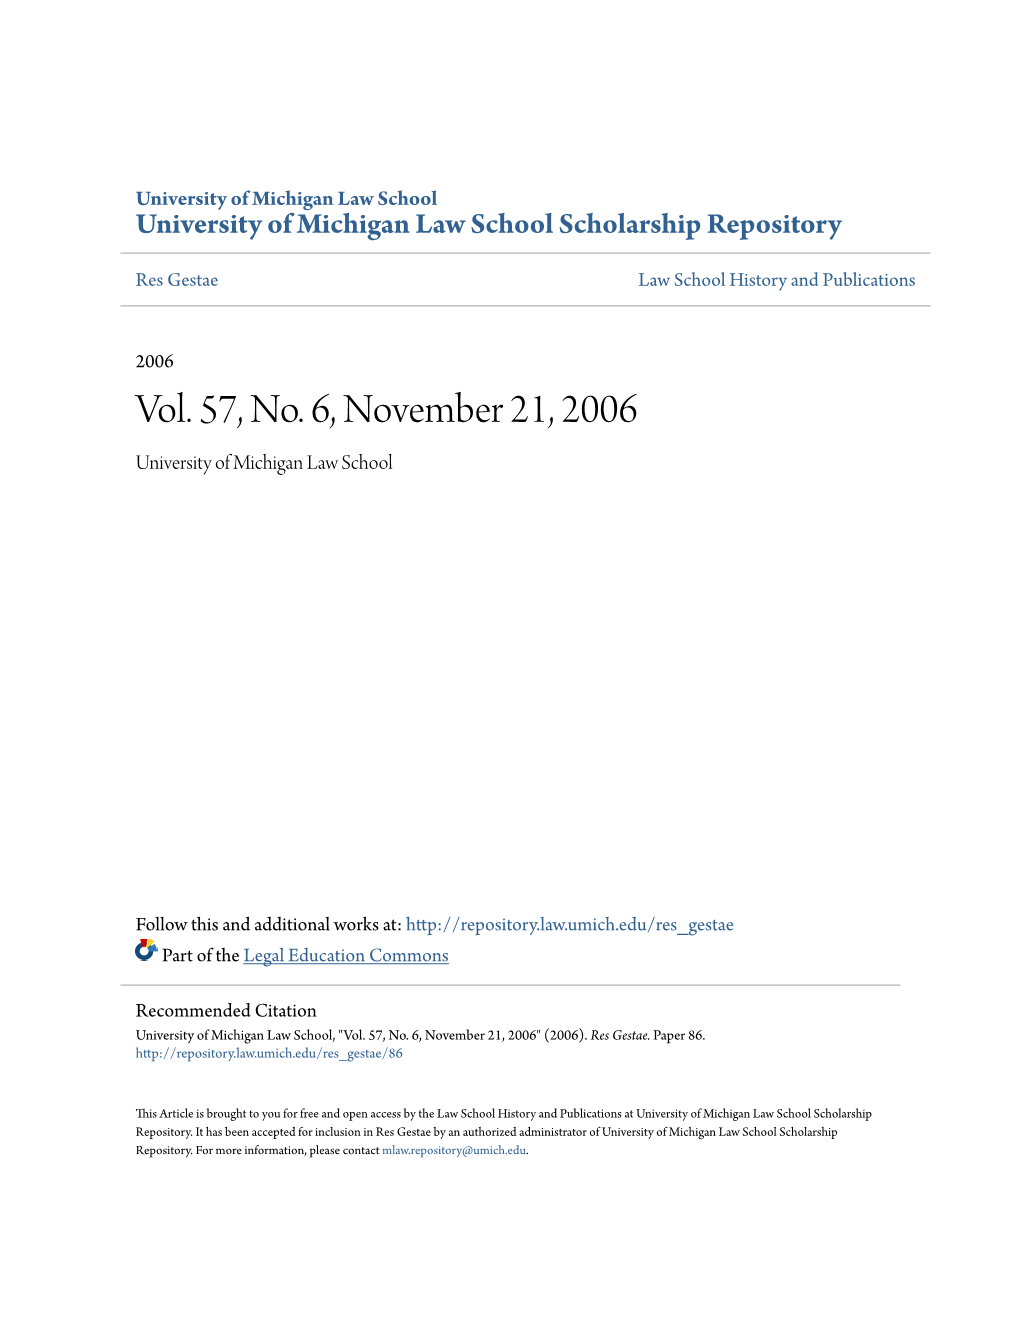 Vol. 57, No. 6, November 21, 2006 University of Michigan Law School